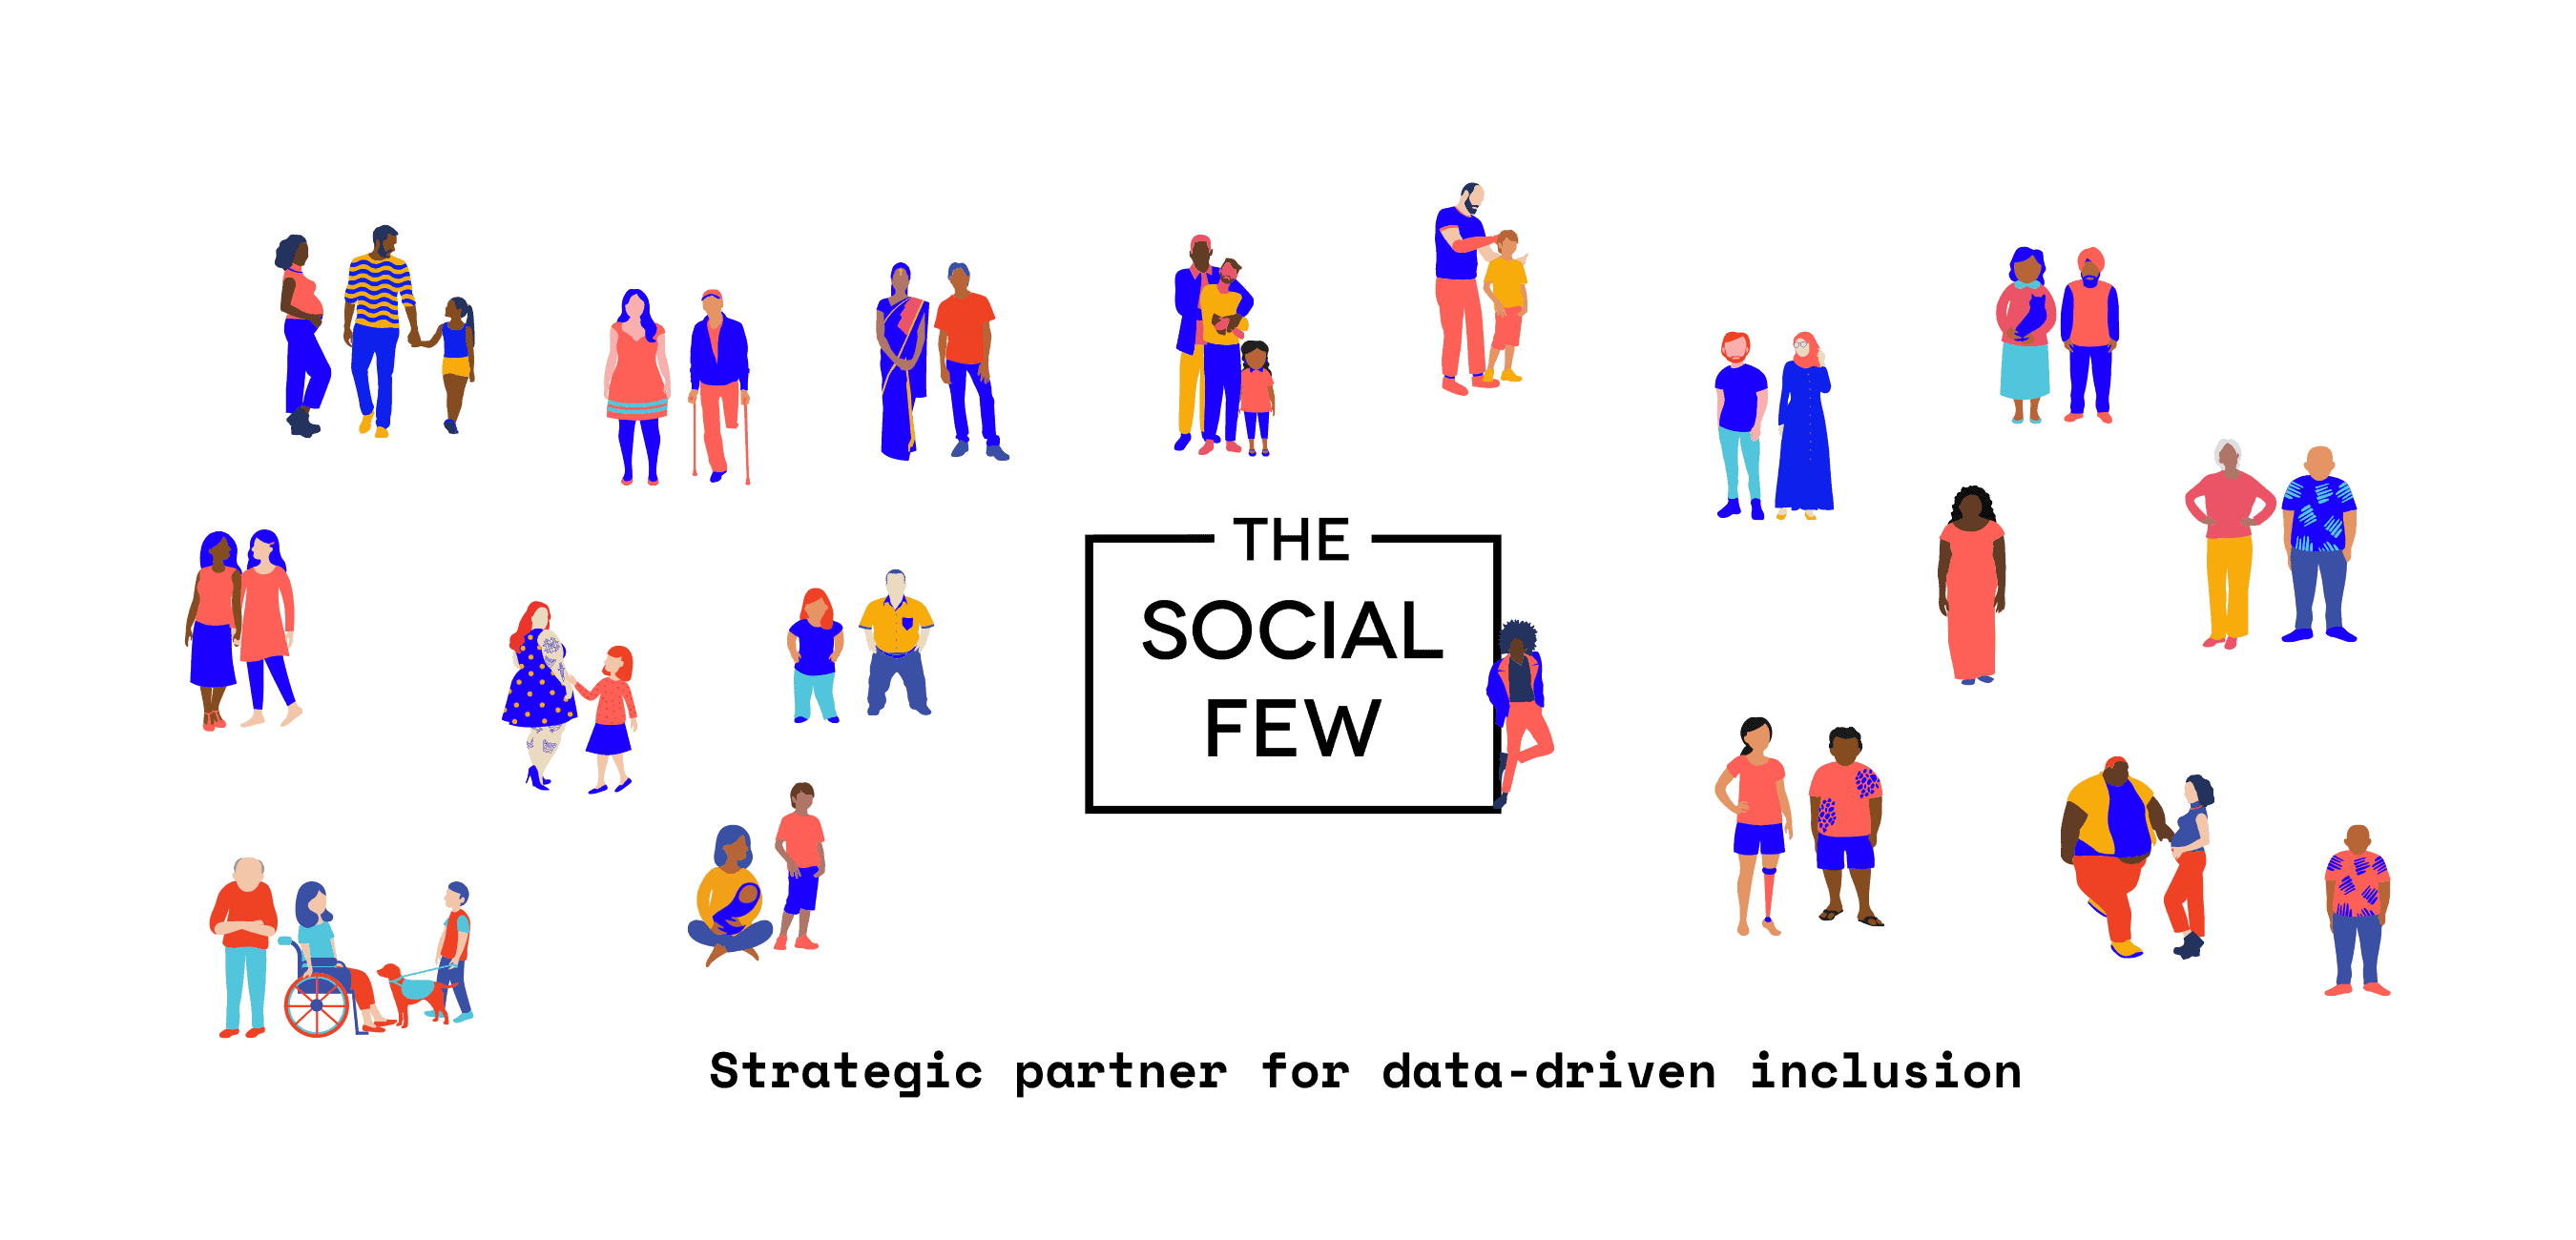 The Social Few